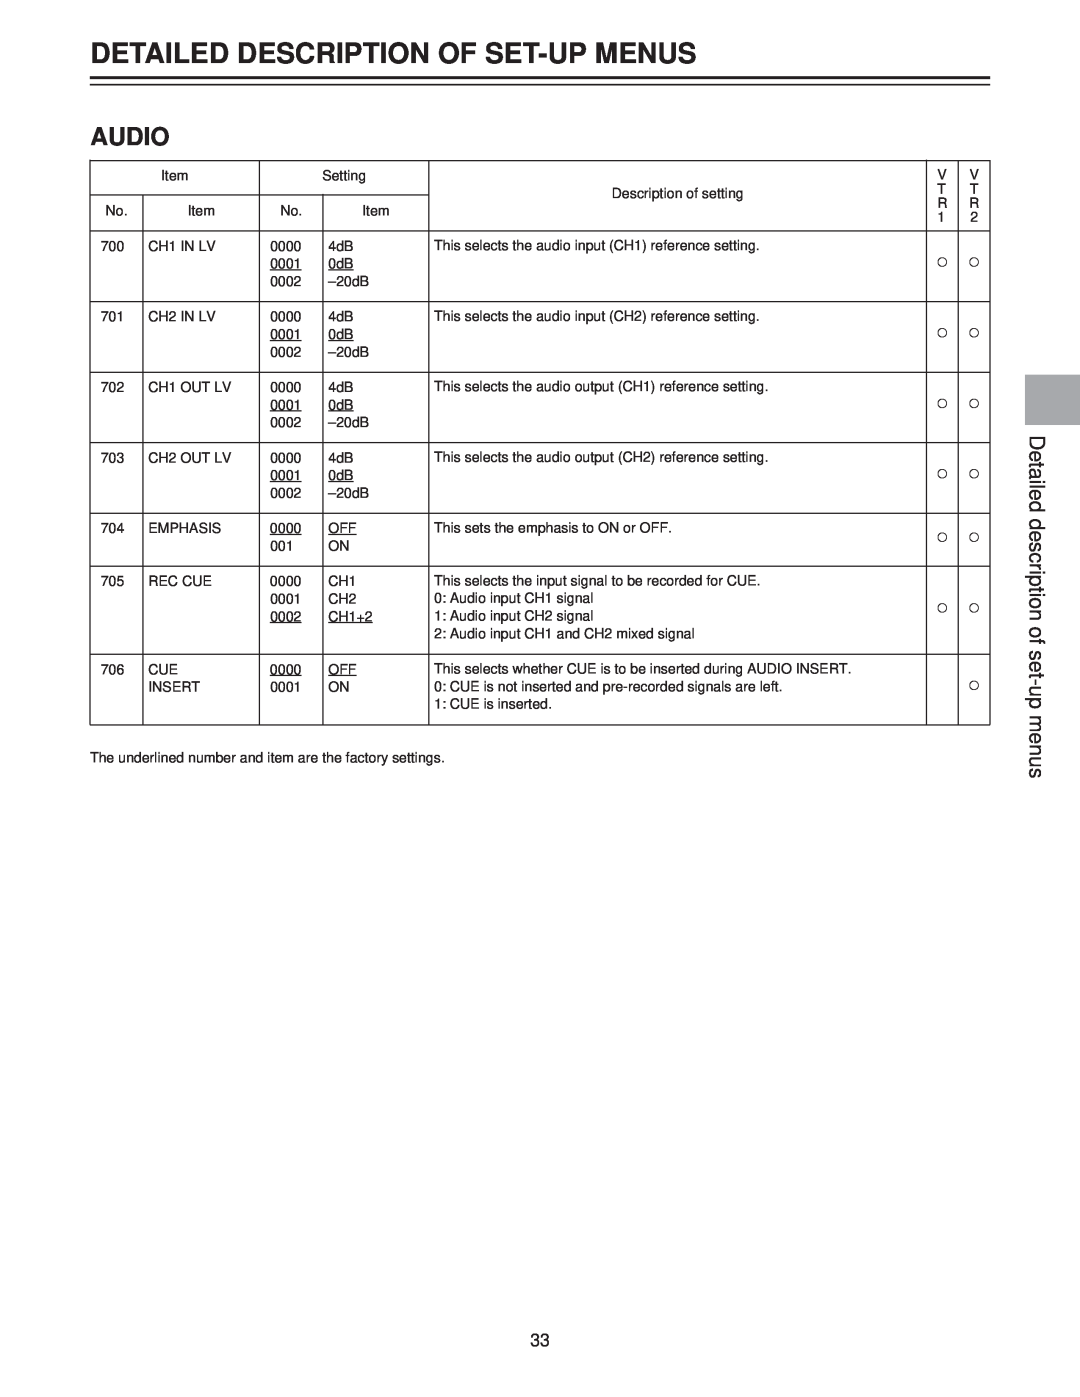 Panasonic AJ-LT85P manual Audio, Detailed Description Of Set-Up Menus, Detailed description of set-up menus 